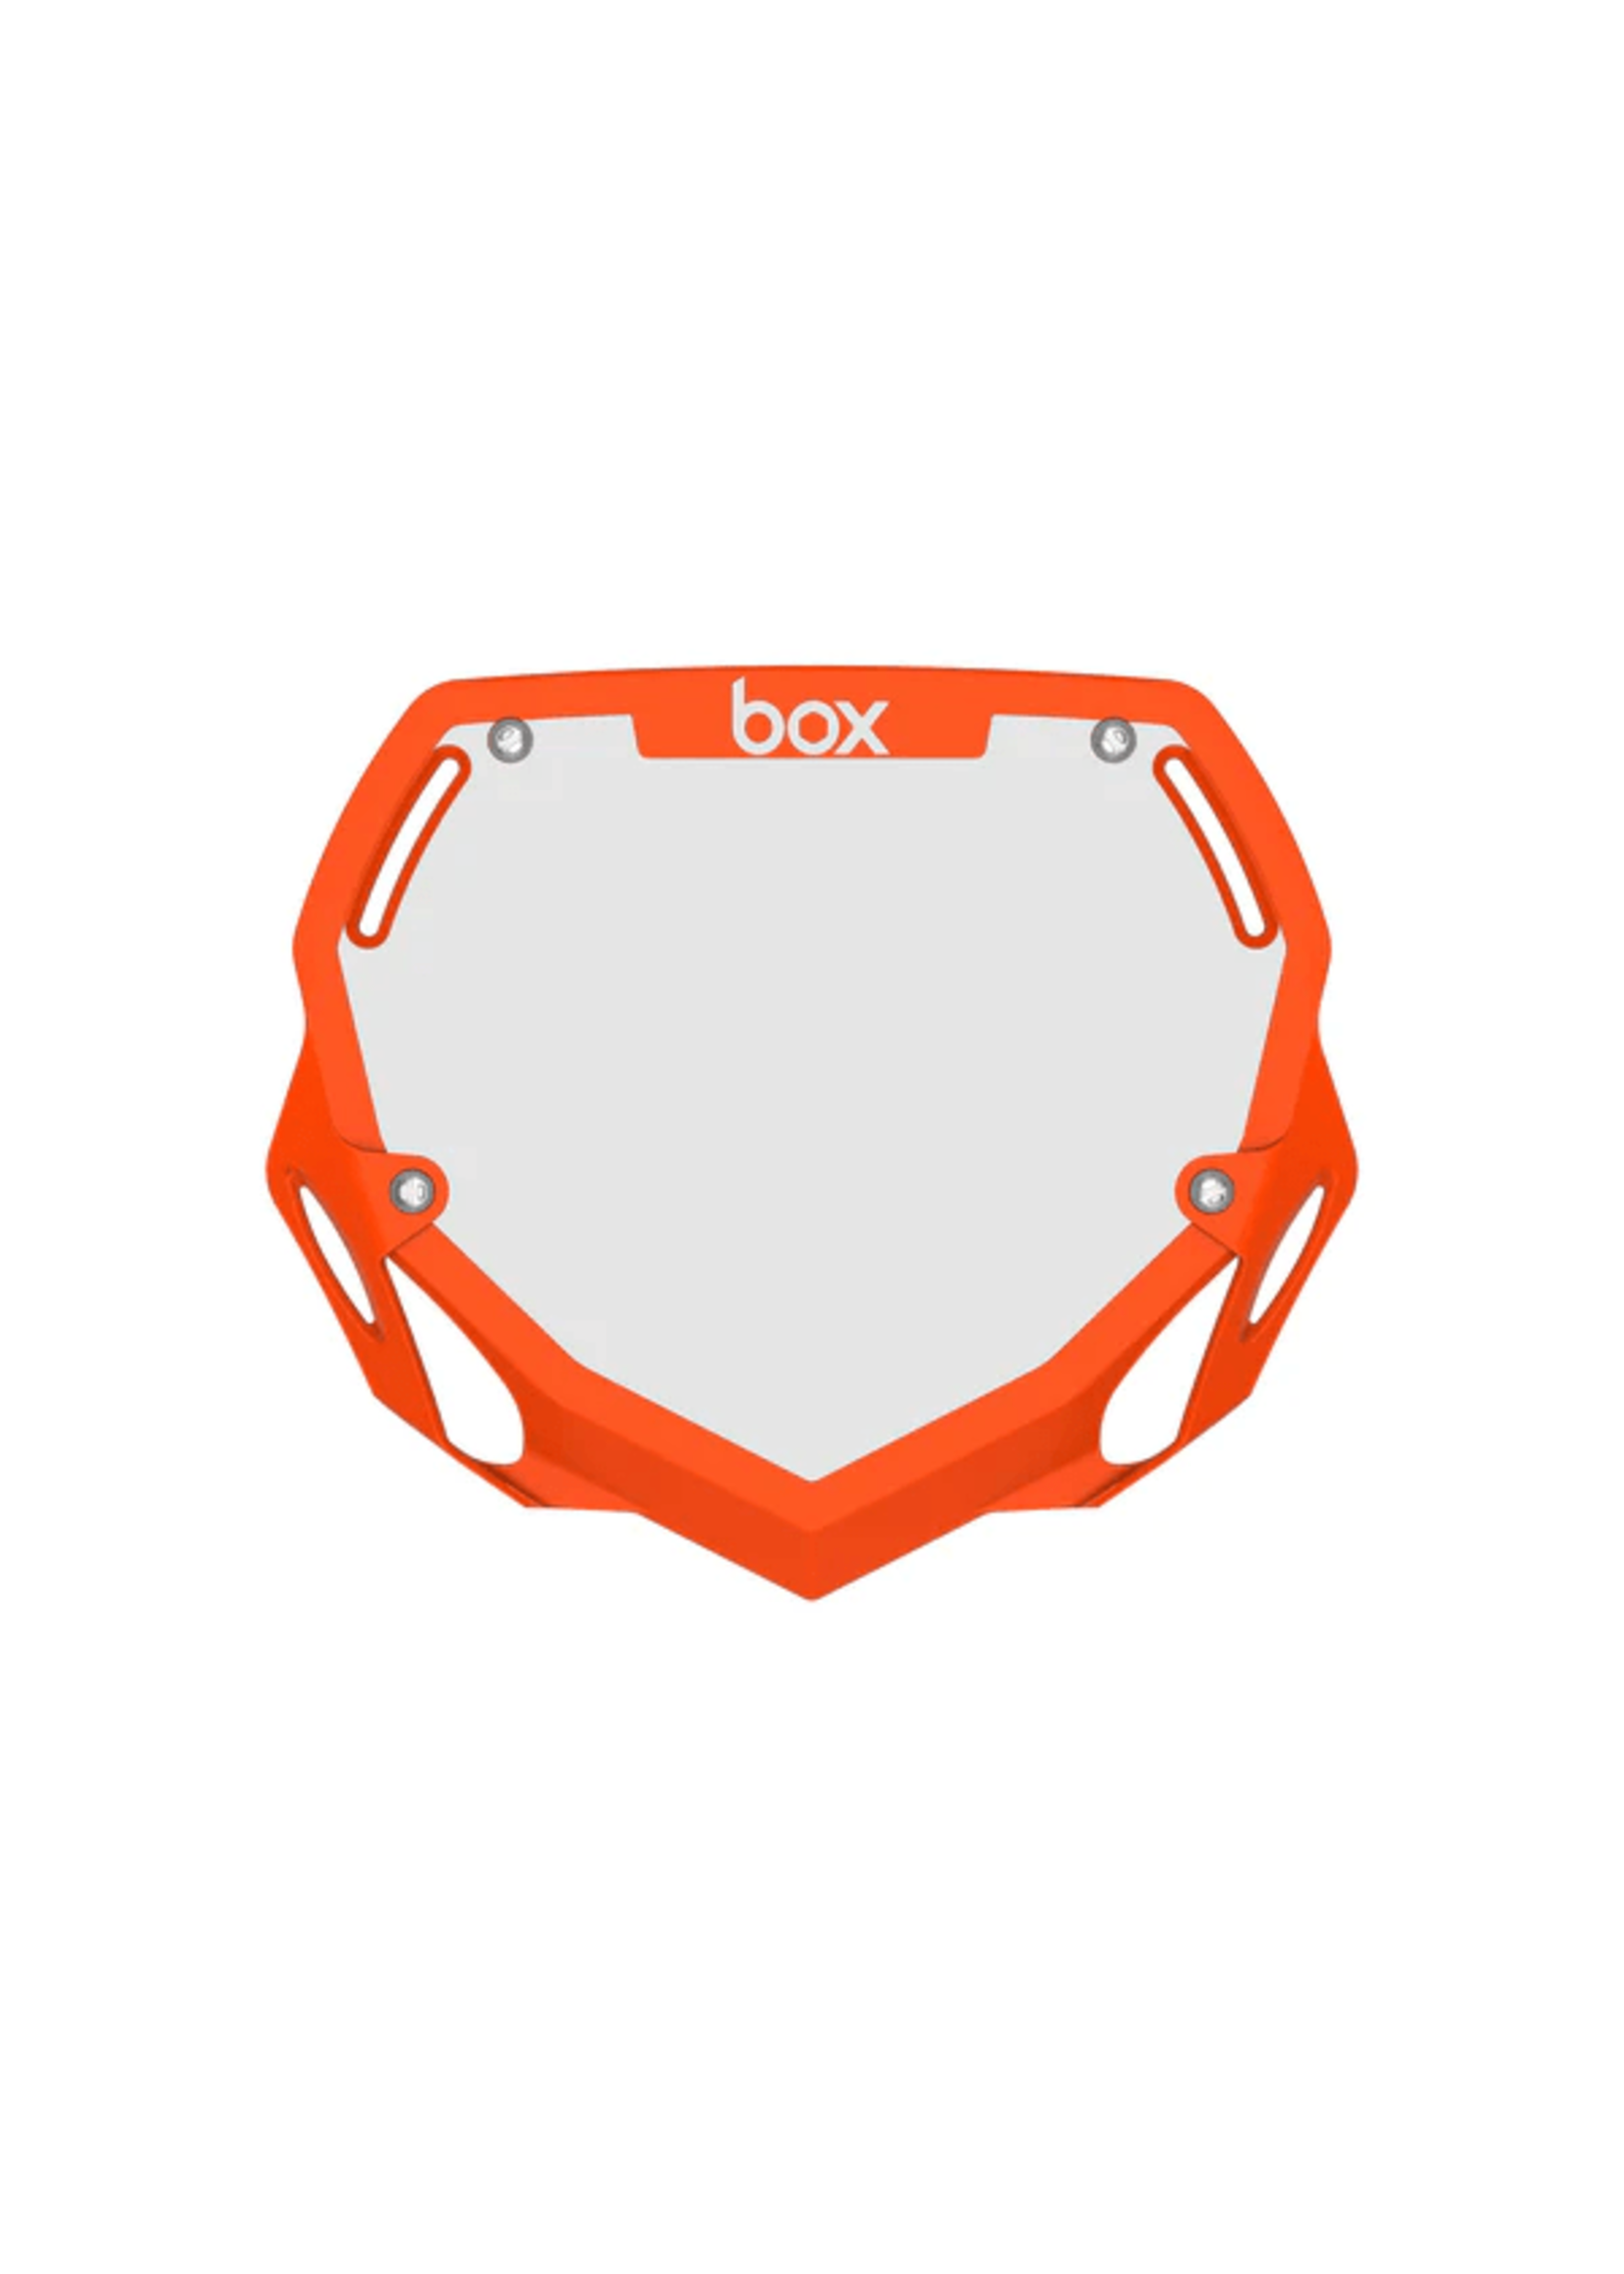 Box Plate BMX Box